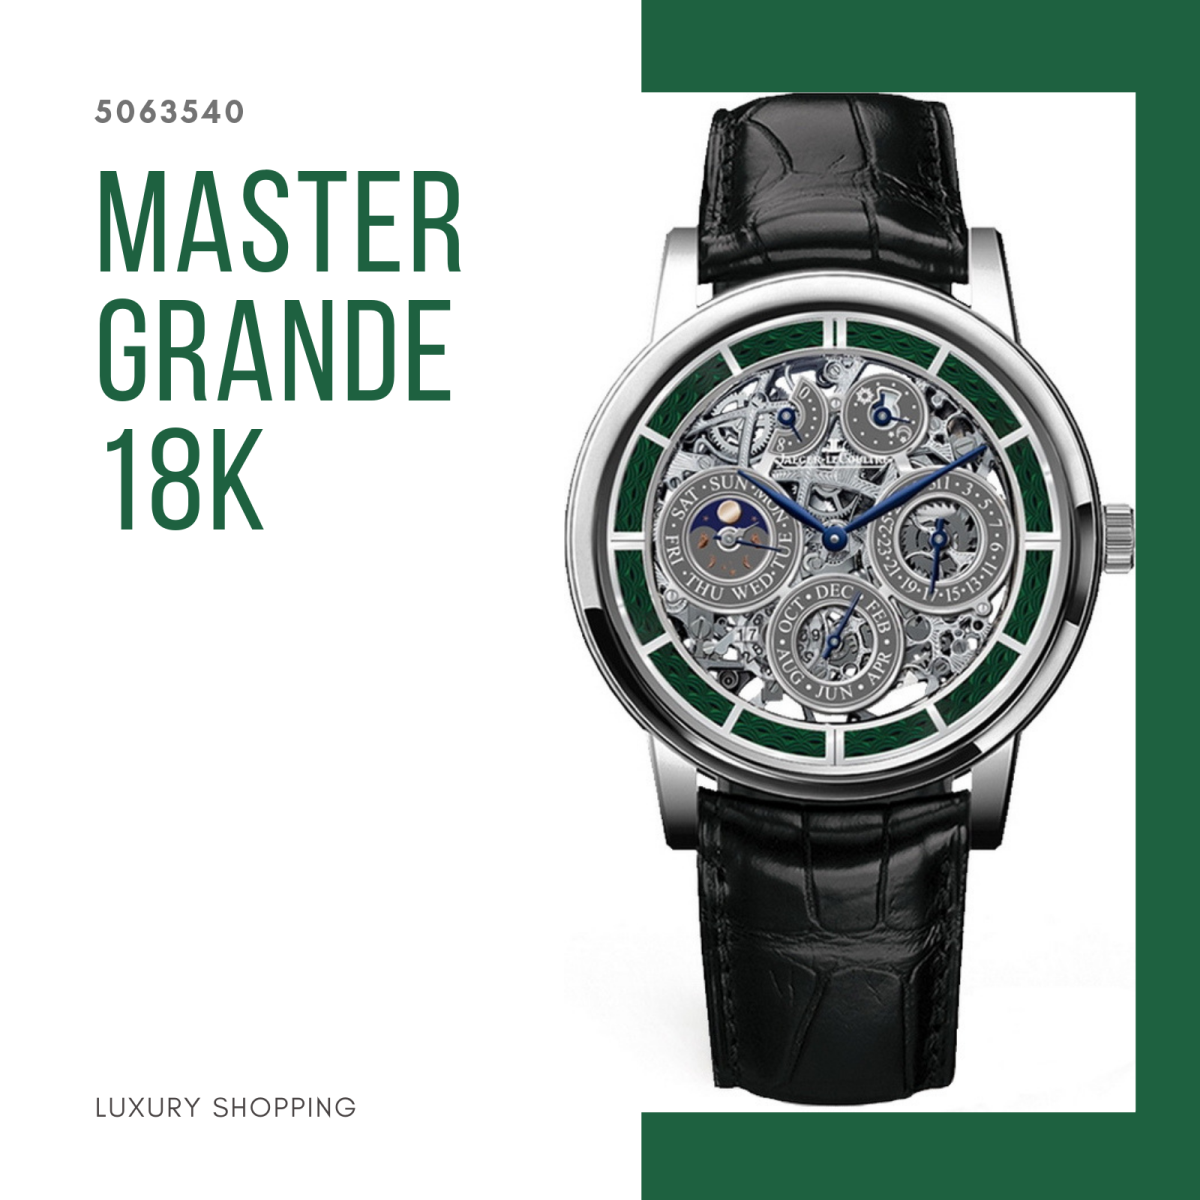 Đồng hồ nam Jaeger-LeCoultre 5063540 Master Brande 18K